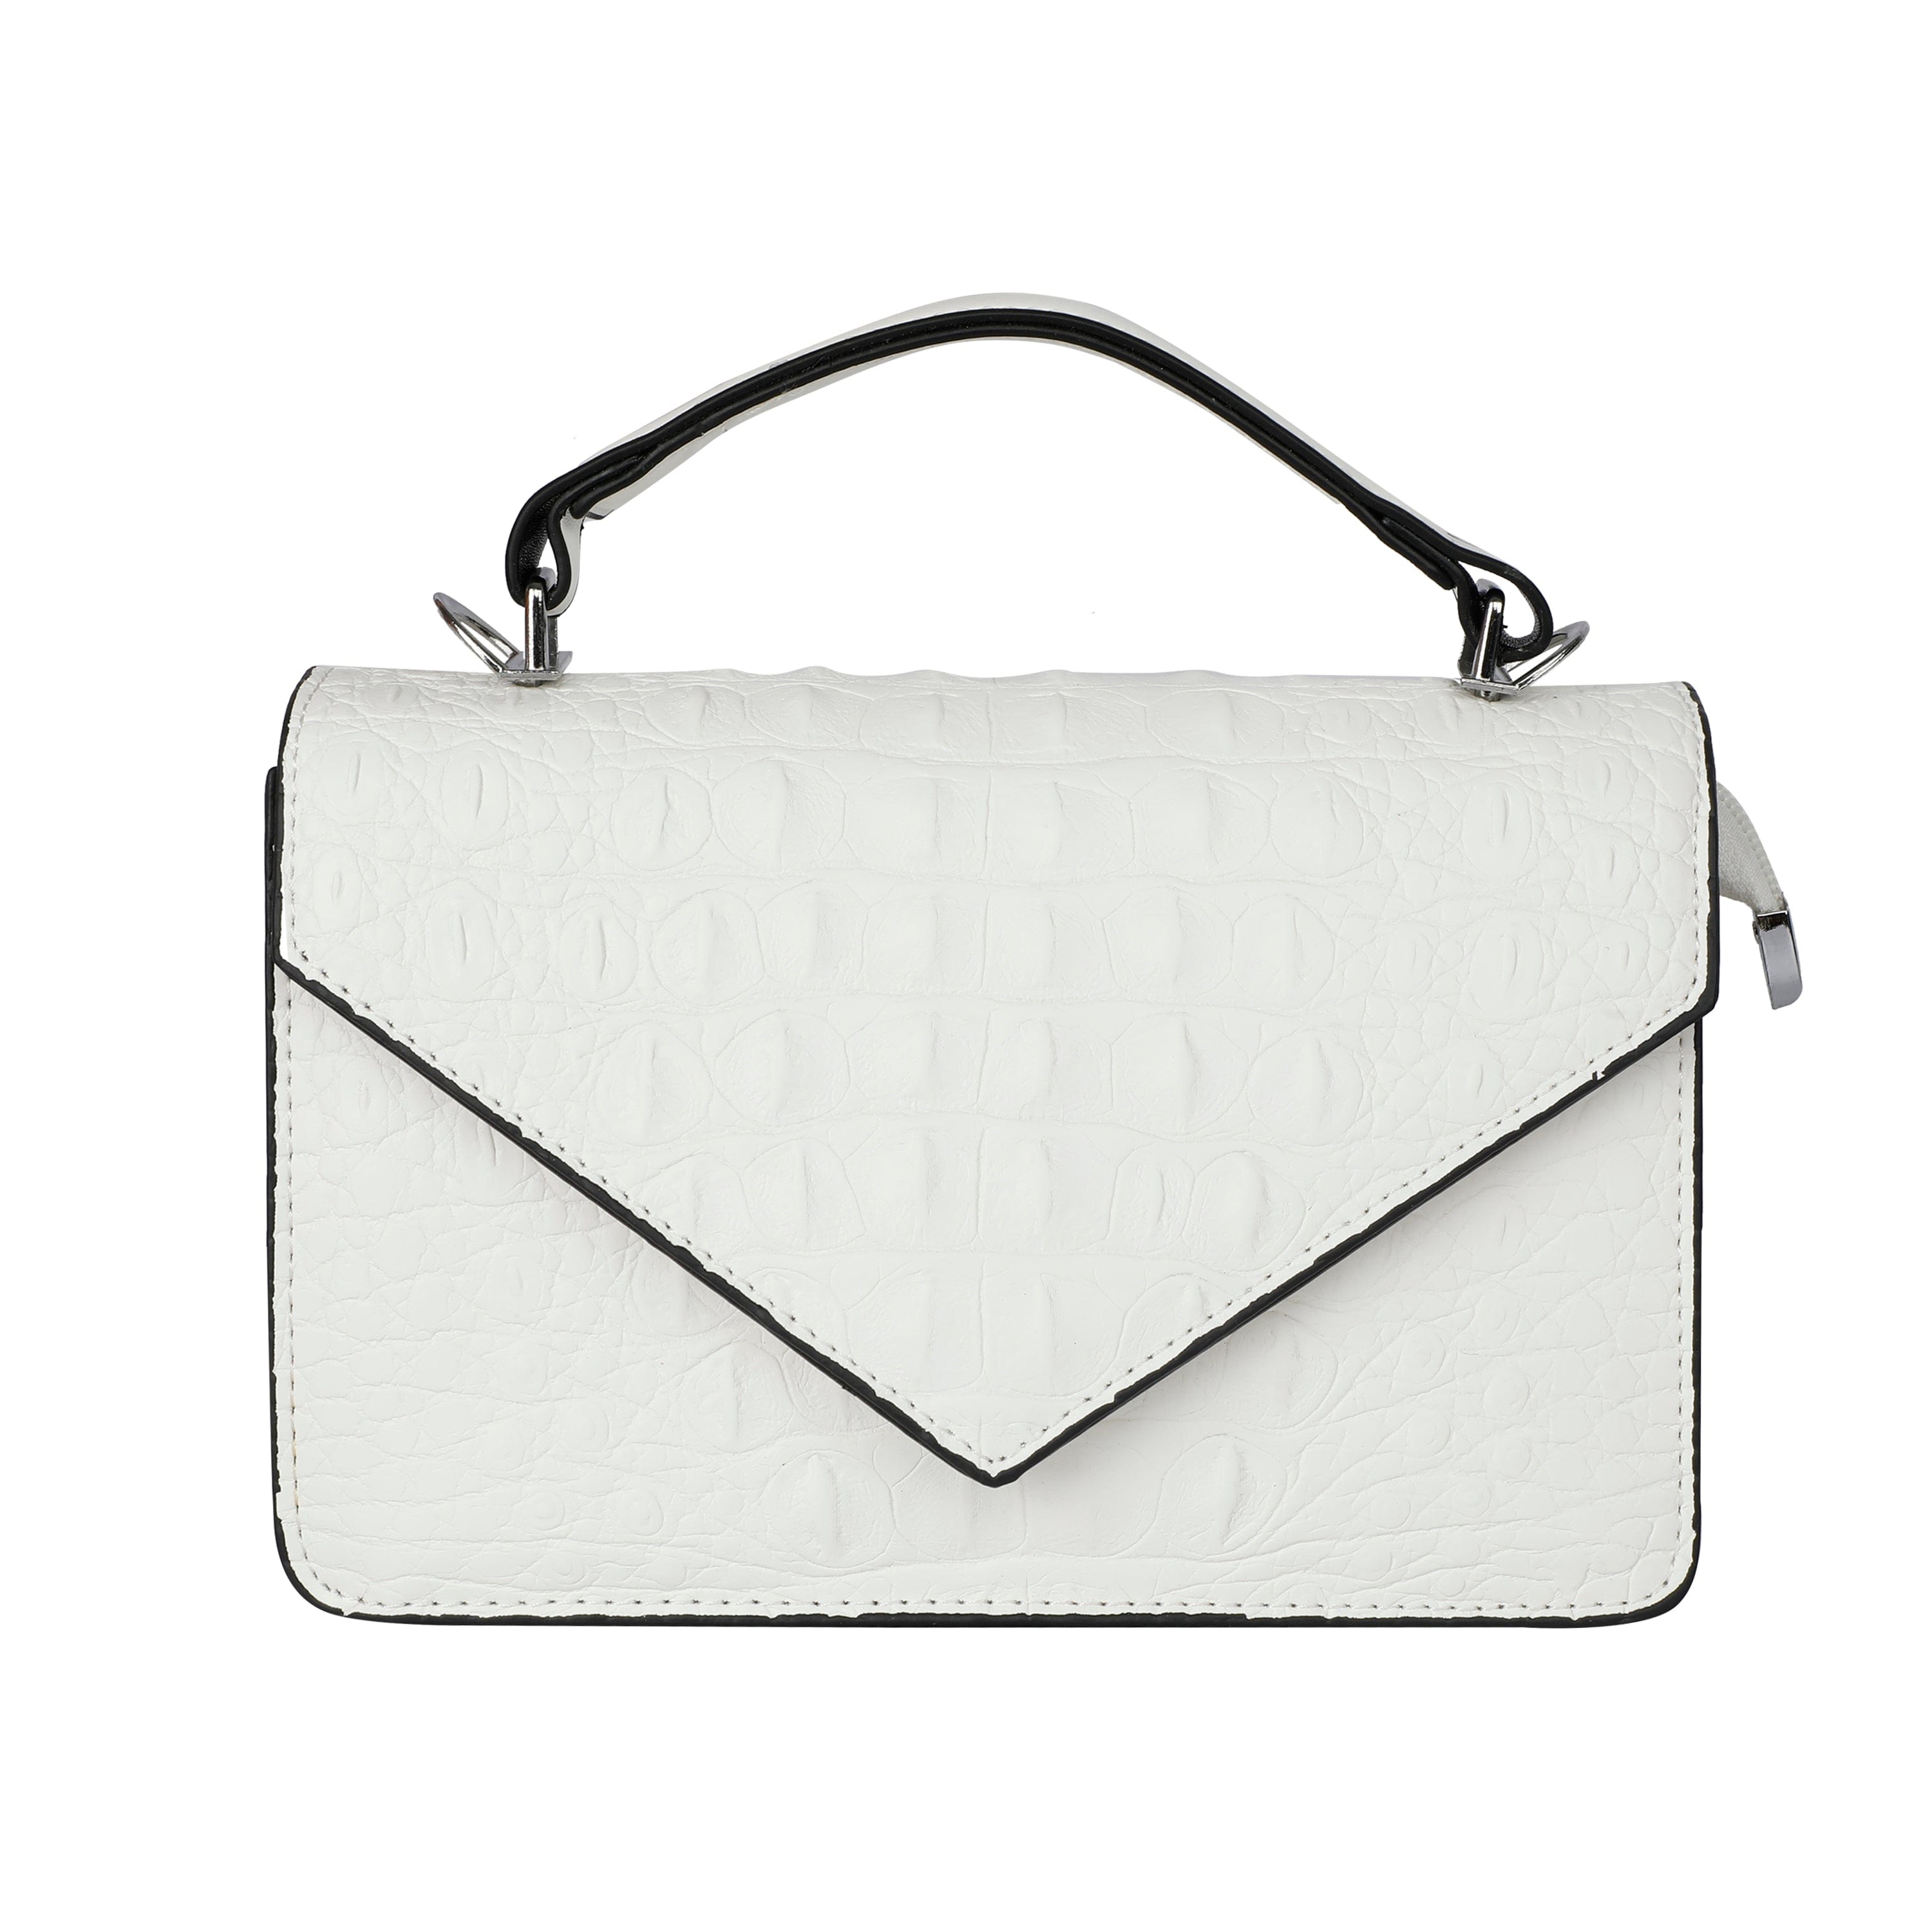 Kinnoti Sling bag White Latest Croco Style Bag